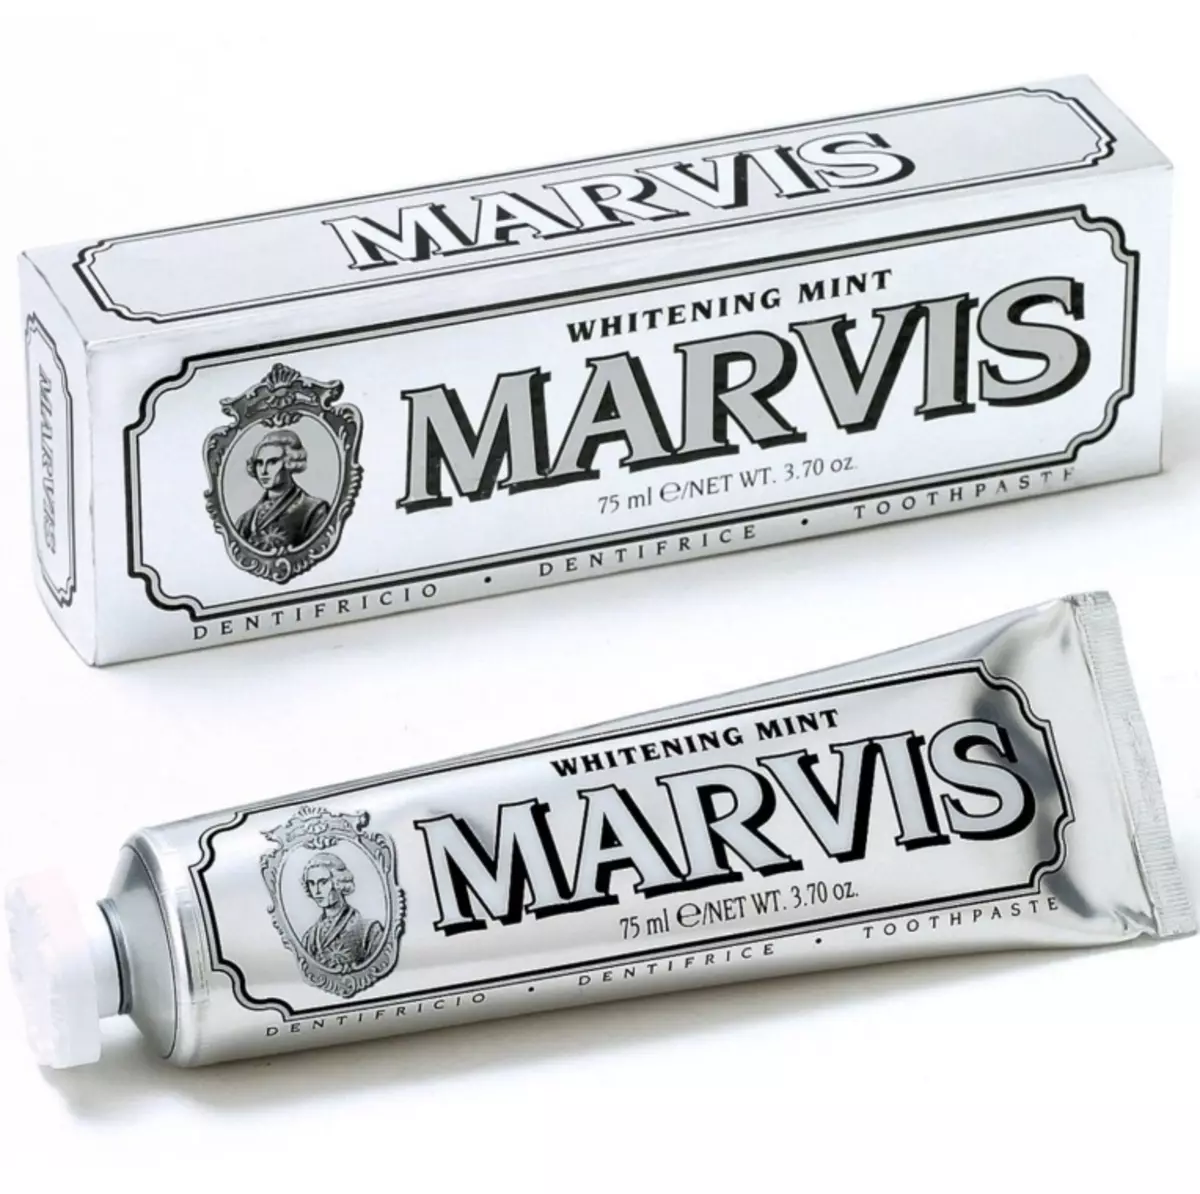 Marvis Toothpaste: Минт һәм Язанс тәме, фторин, композициясез, композиция һәм стоматологларсыз 24032_11